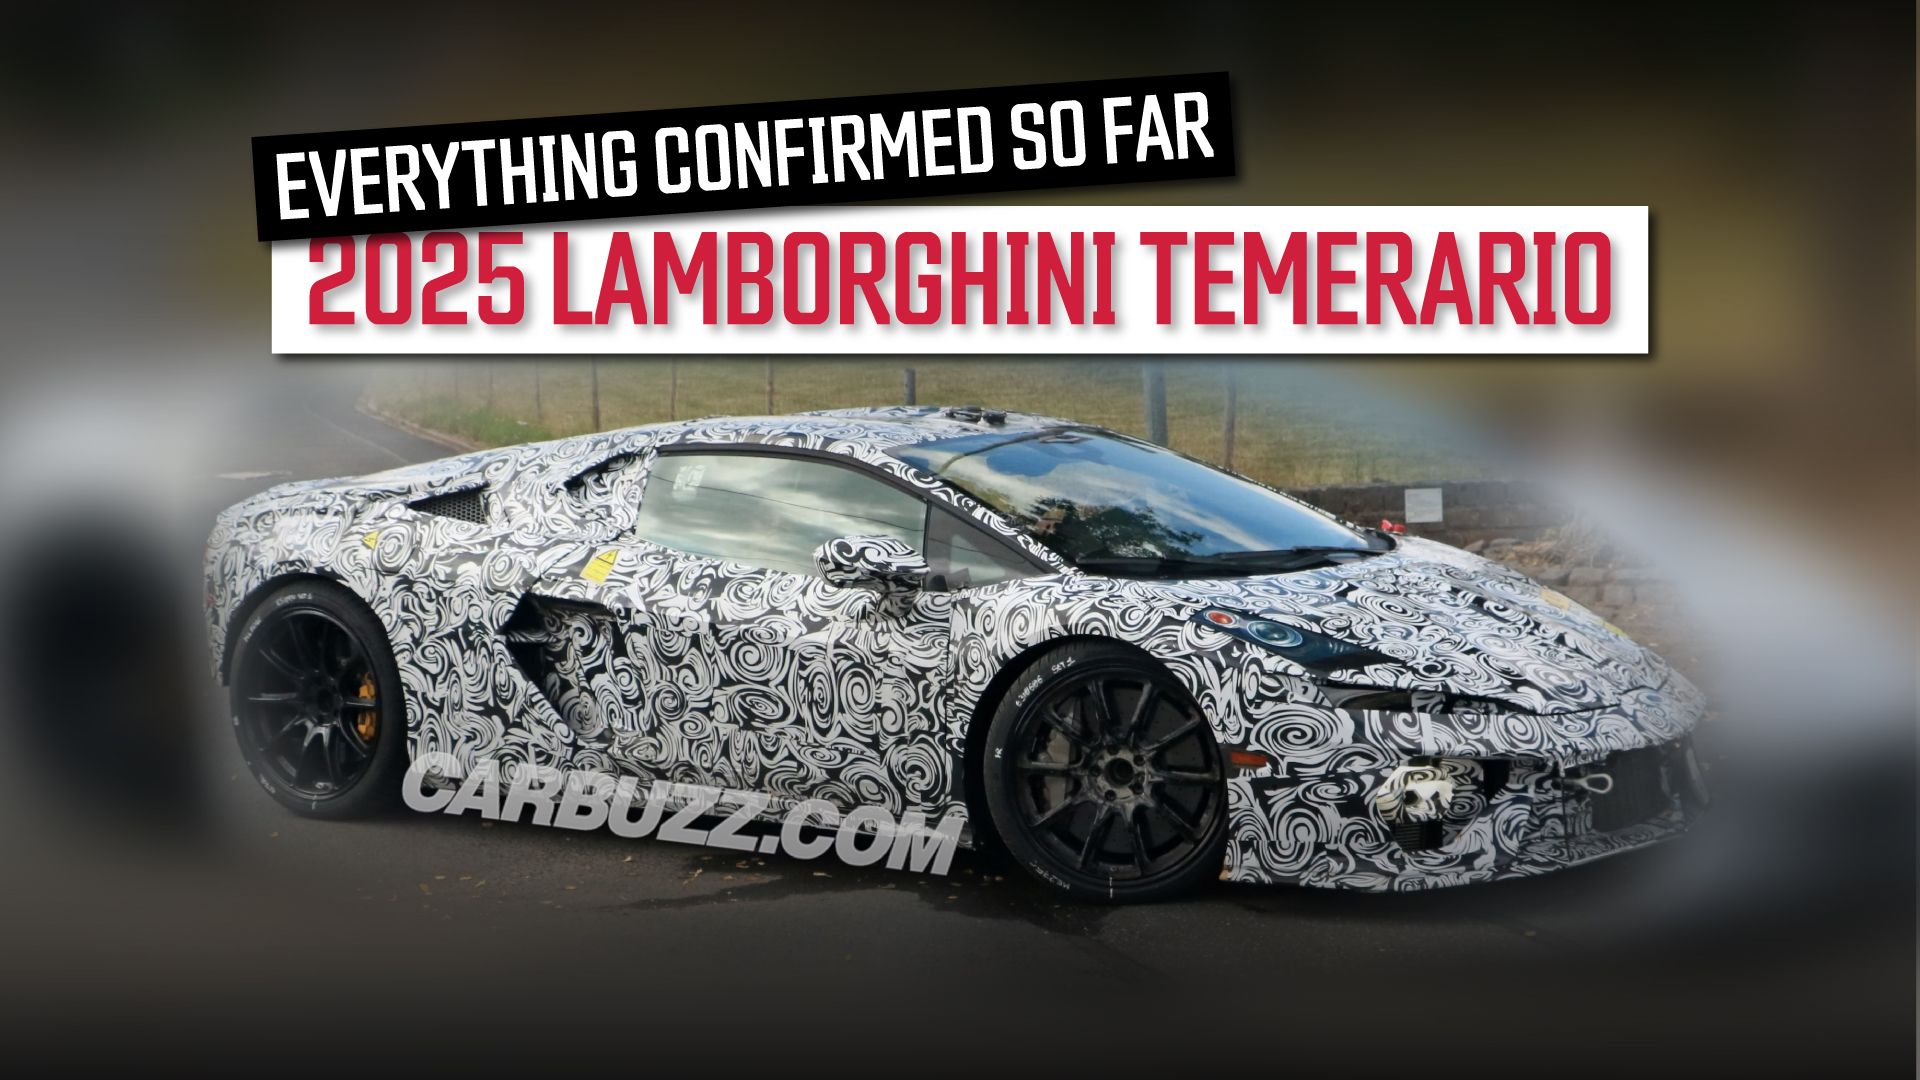 A camouflaged Lamborghini suspected to be the 2025 Temerario